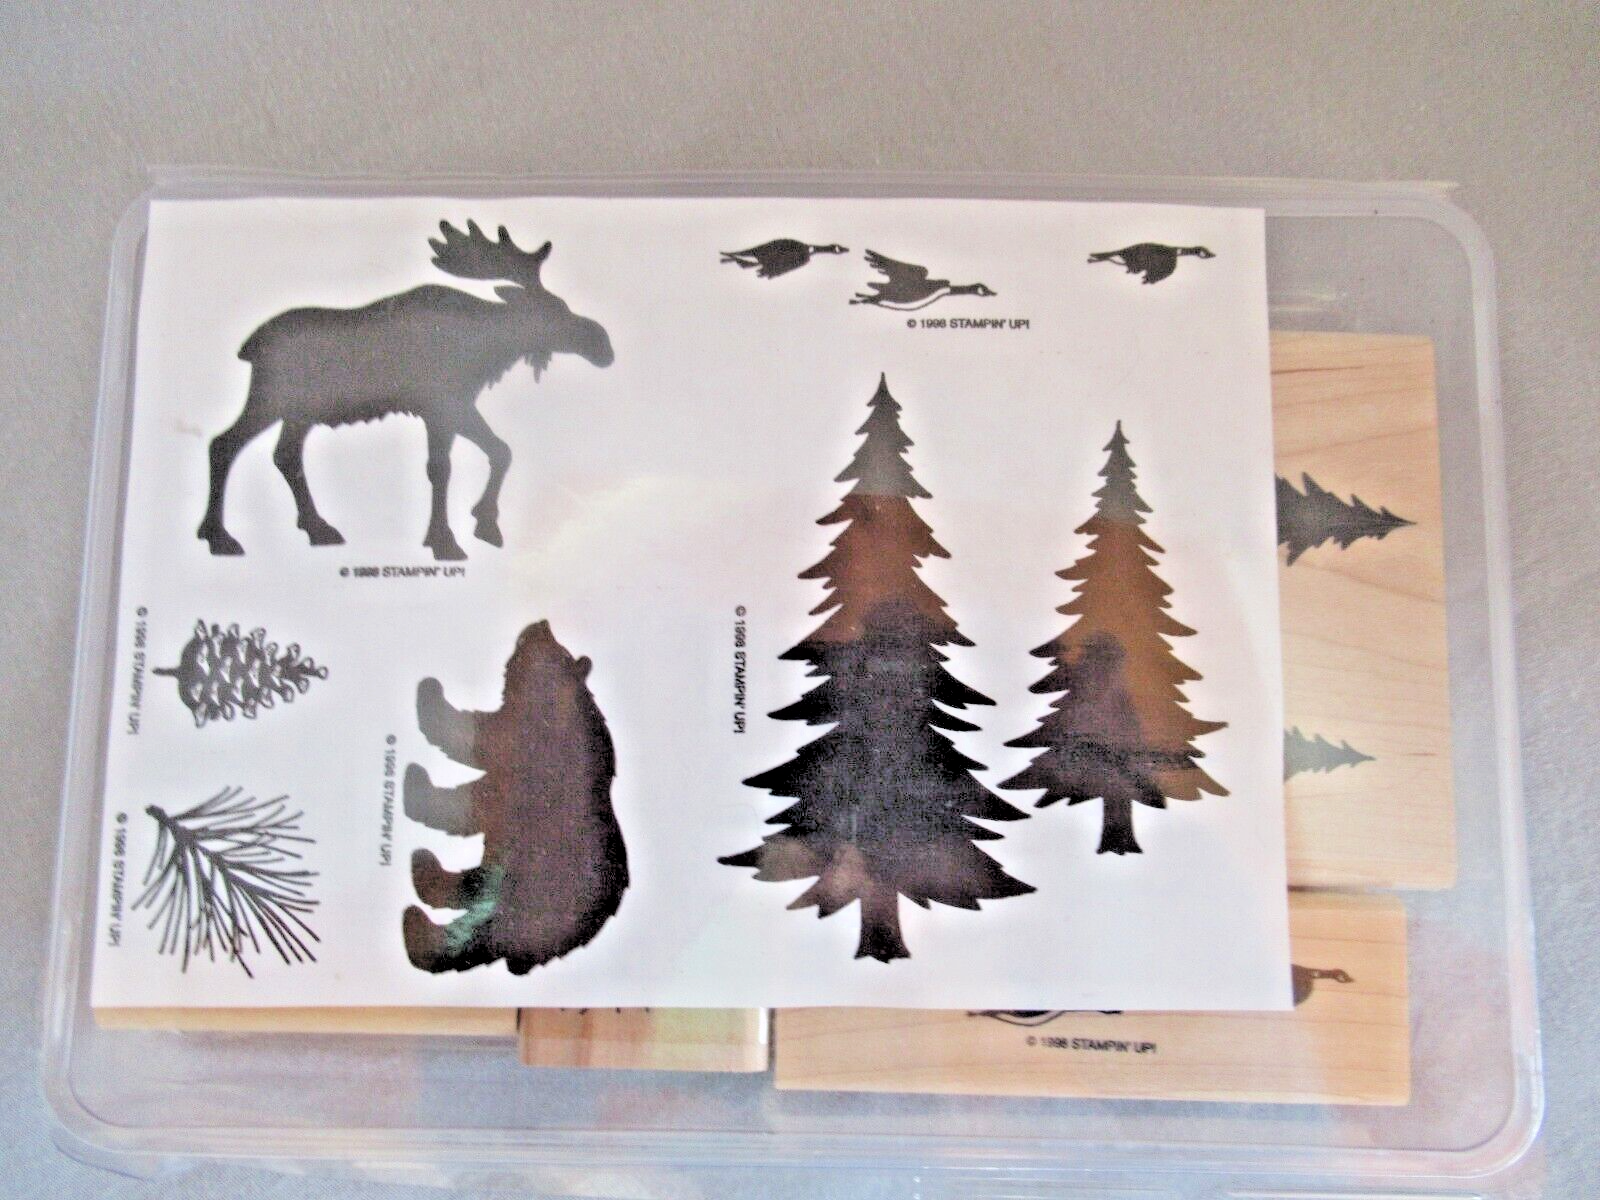 Stampin Up! 1998 wood block set 6 pieces pine trees moose bear geese pine cone - $13.67